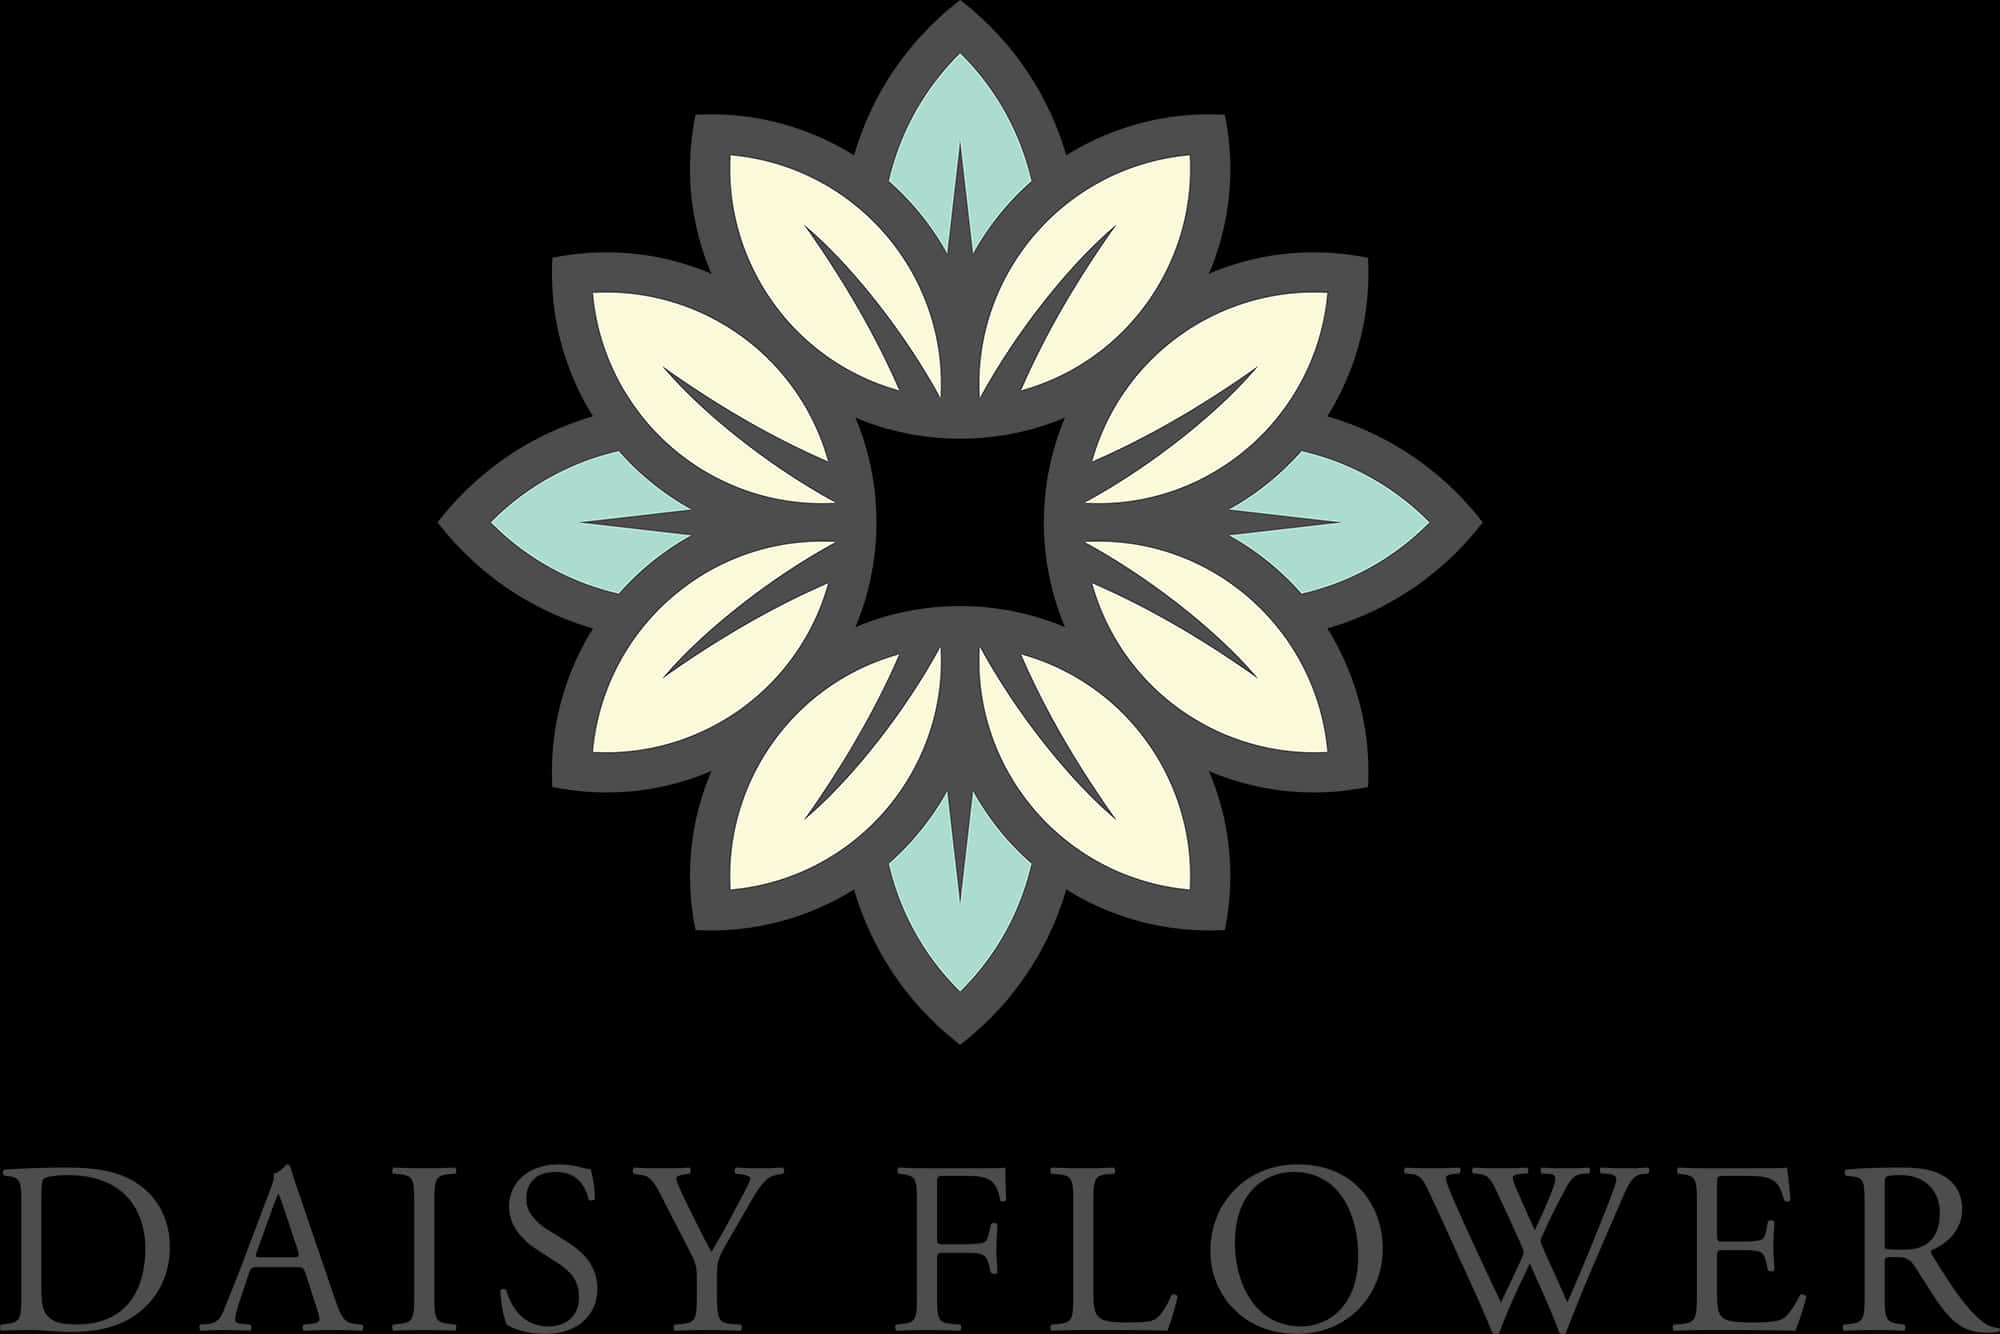 Stylized Daisy Flower Graphic